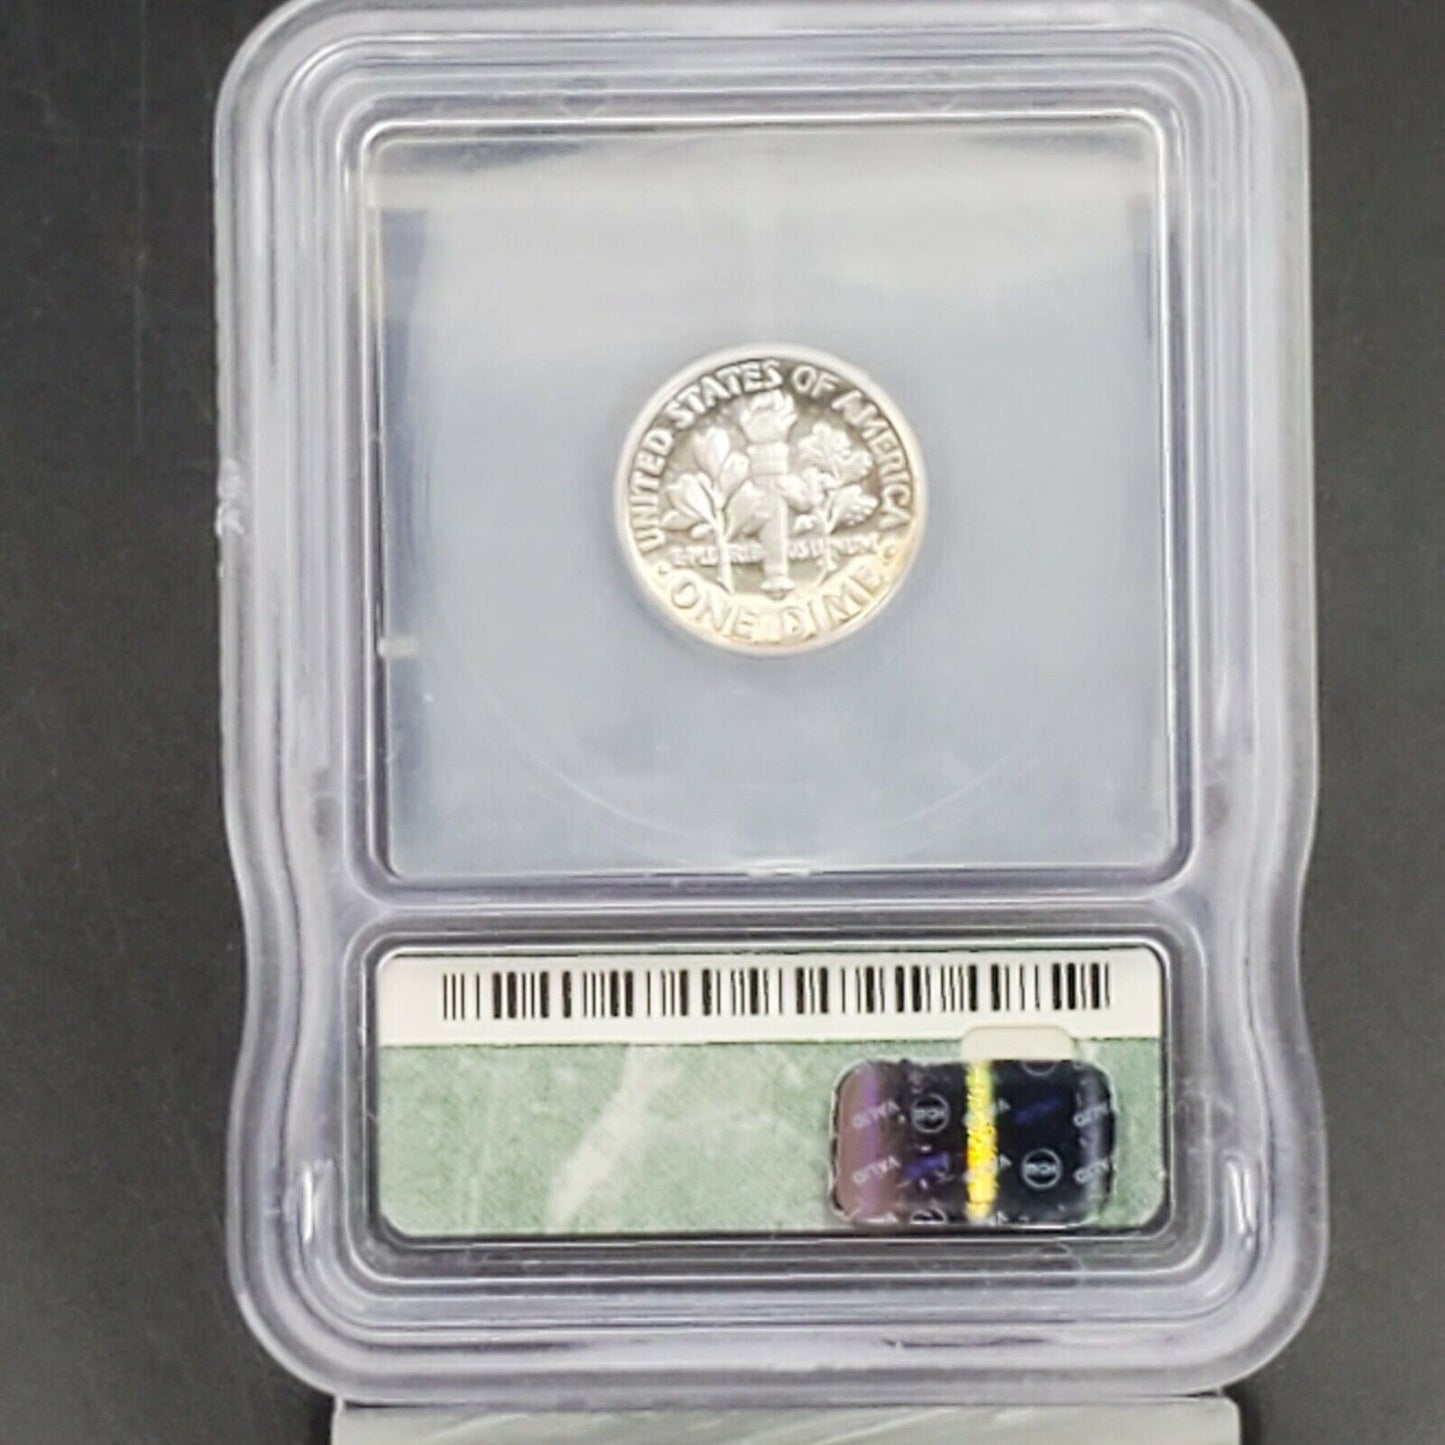 1961 P Roosevelt Silver Proof Dime Coin ICG PR69 DCAM Deep Cameo Correct Graded